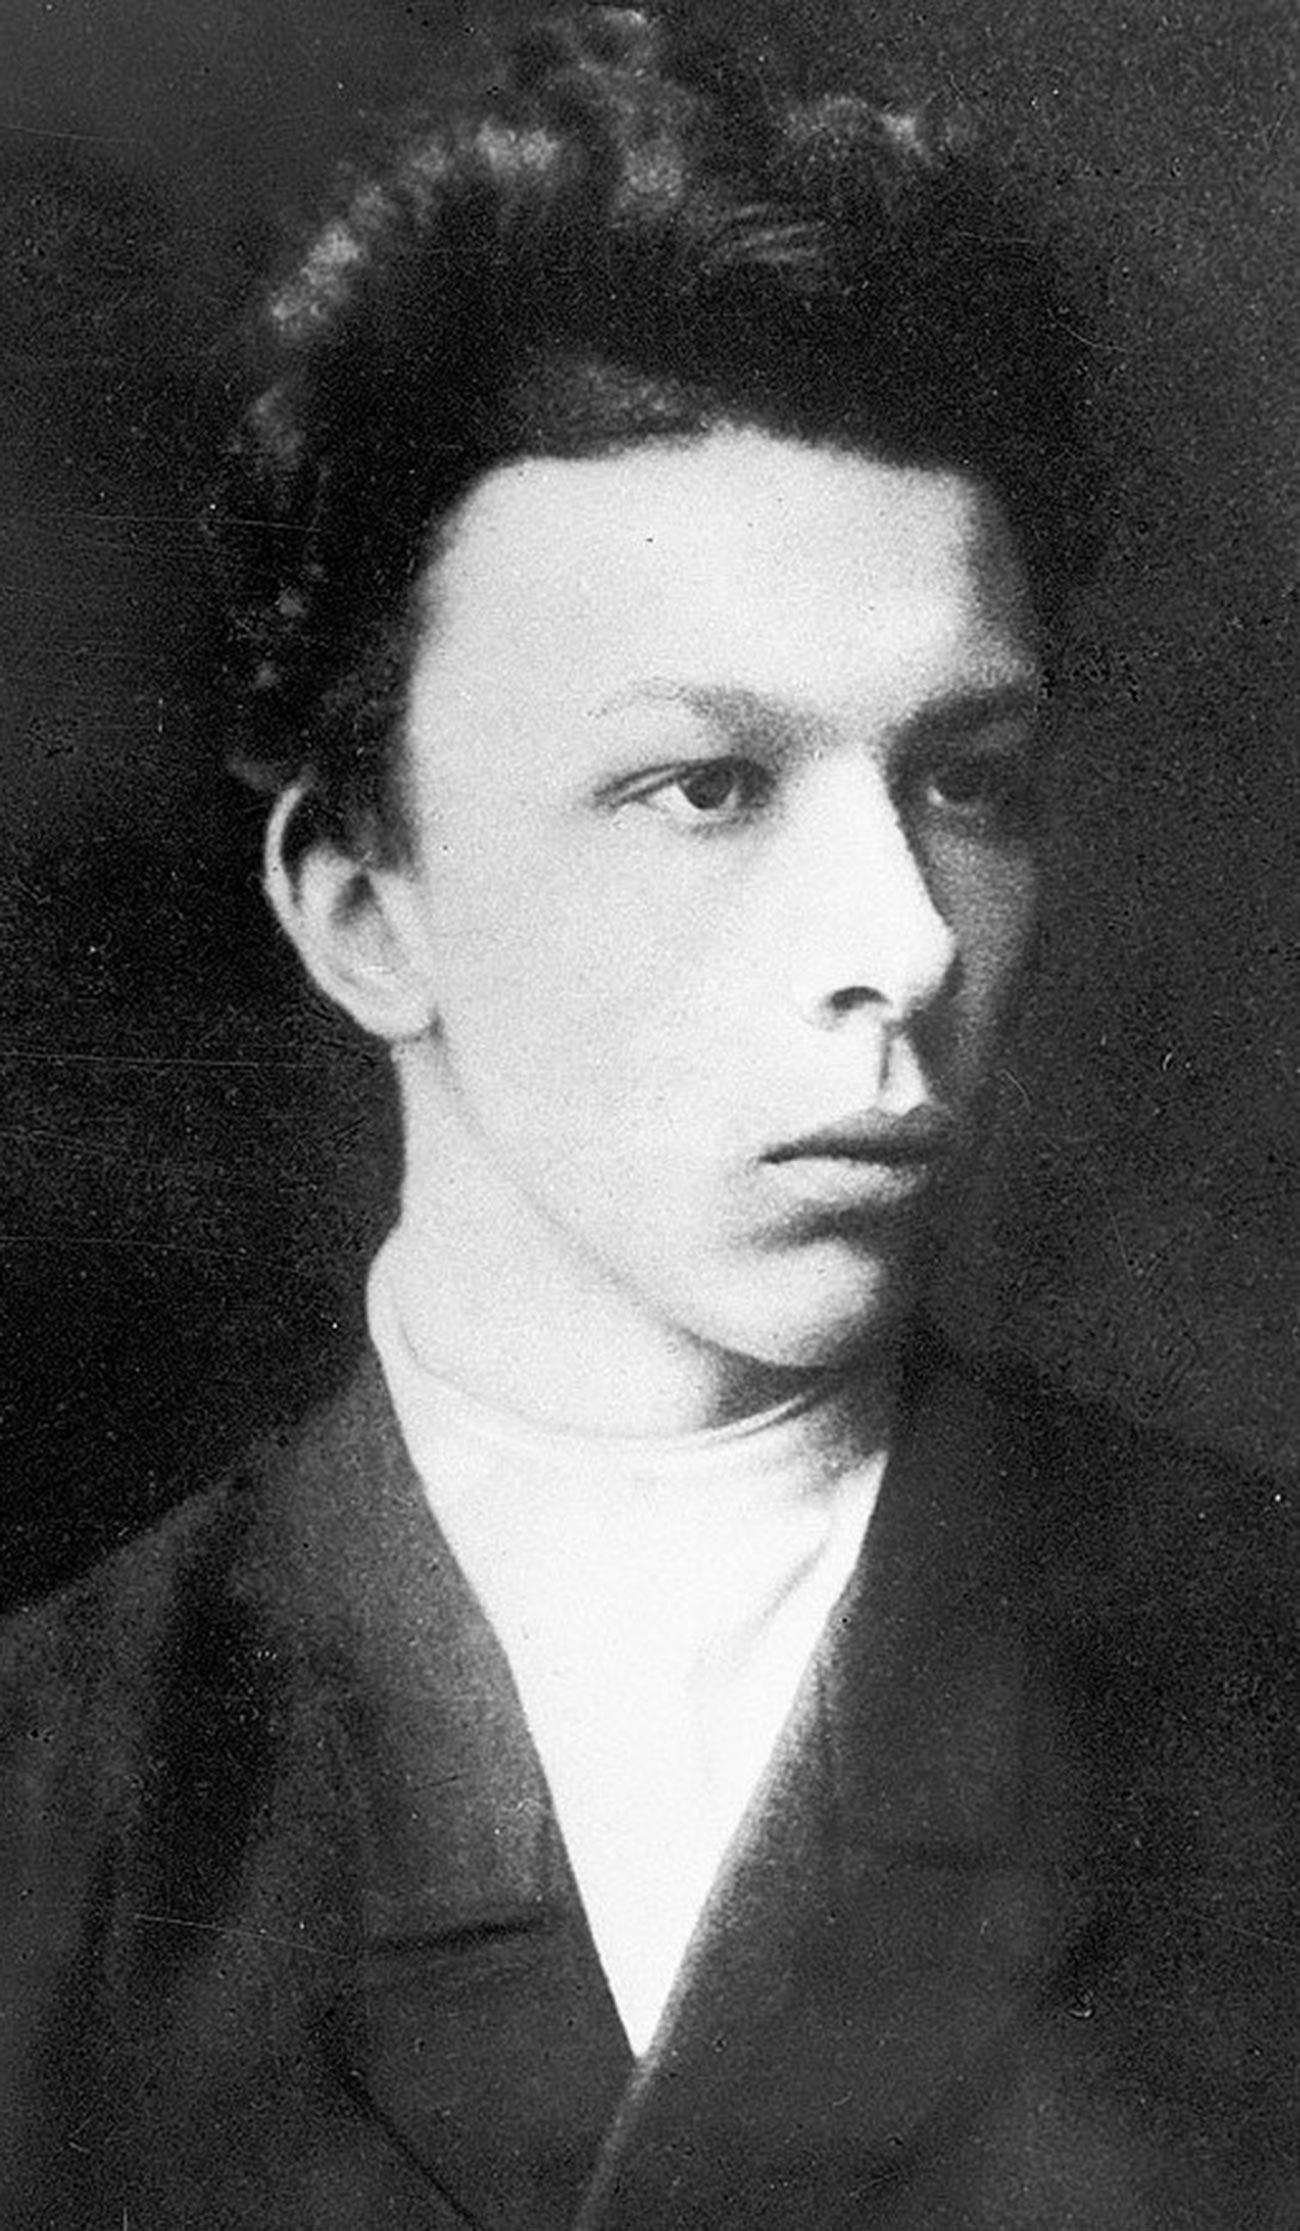 Aleksandr Ulyanov (1866-1887), Vladimimr Lenin's older brother.